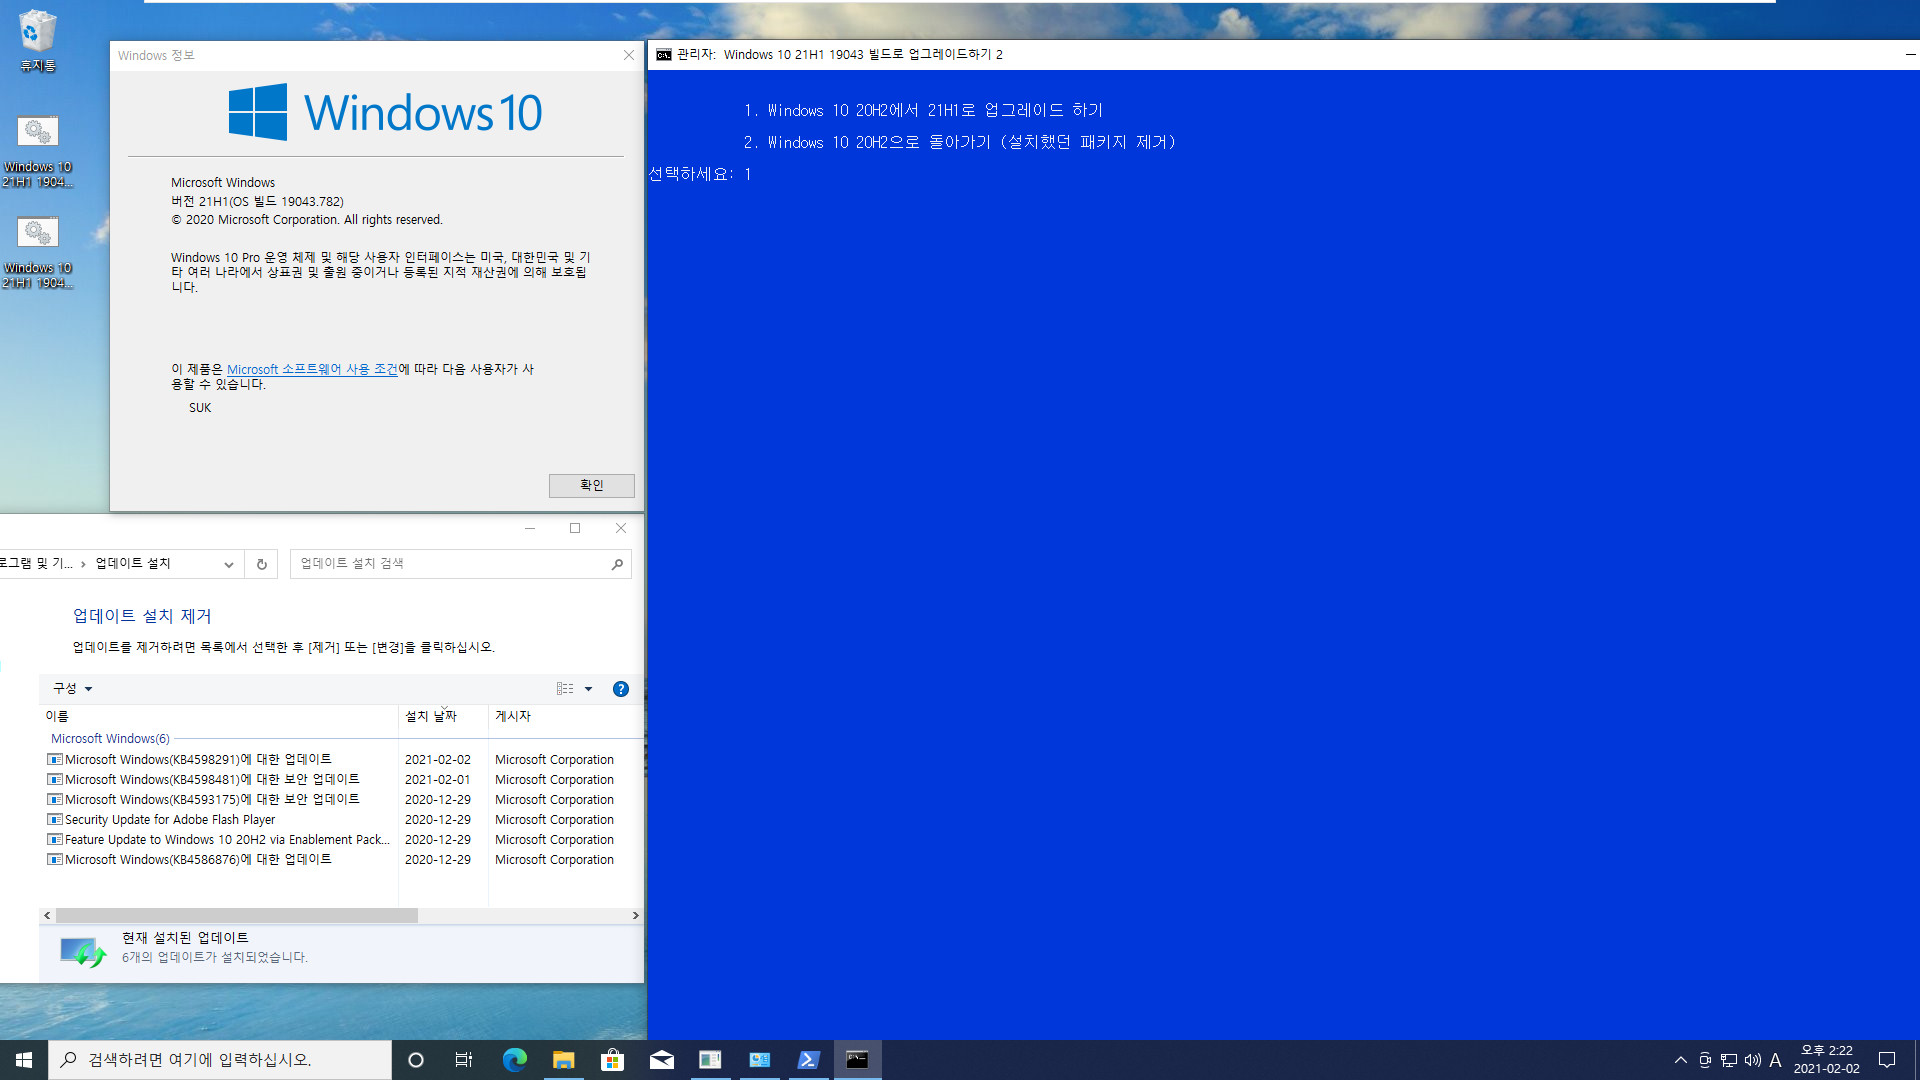 Windows 10 21H1 19043 빌드로 업그레이드하기2.bat 테스트 - 21H1 업그레이드 후에 새 누적 업데이트 설치하려면, 21H1 제거한 후에 새 누적 업데이트 설치해야 하네요 2021-02-02_142215.jpg